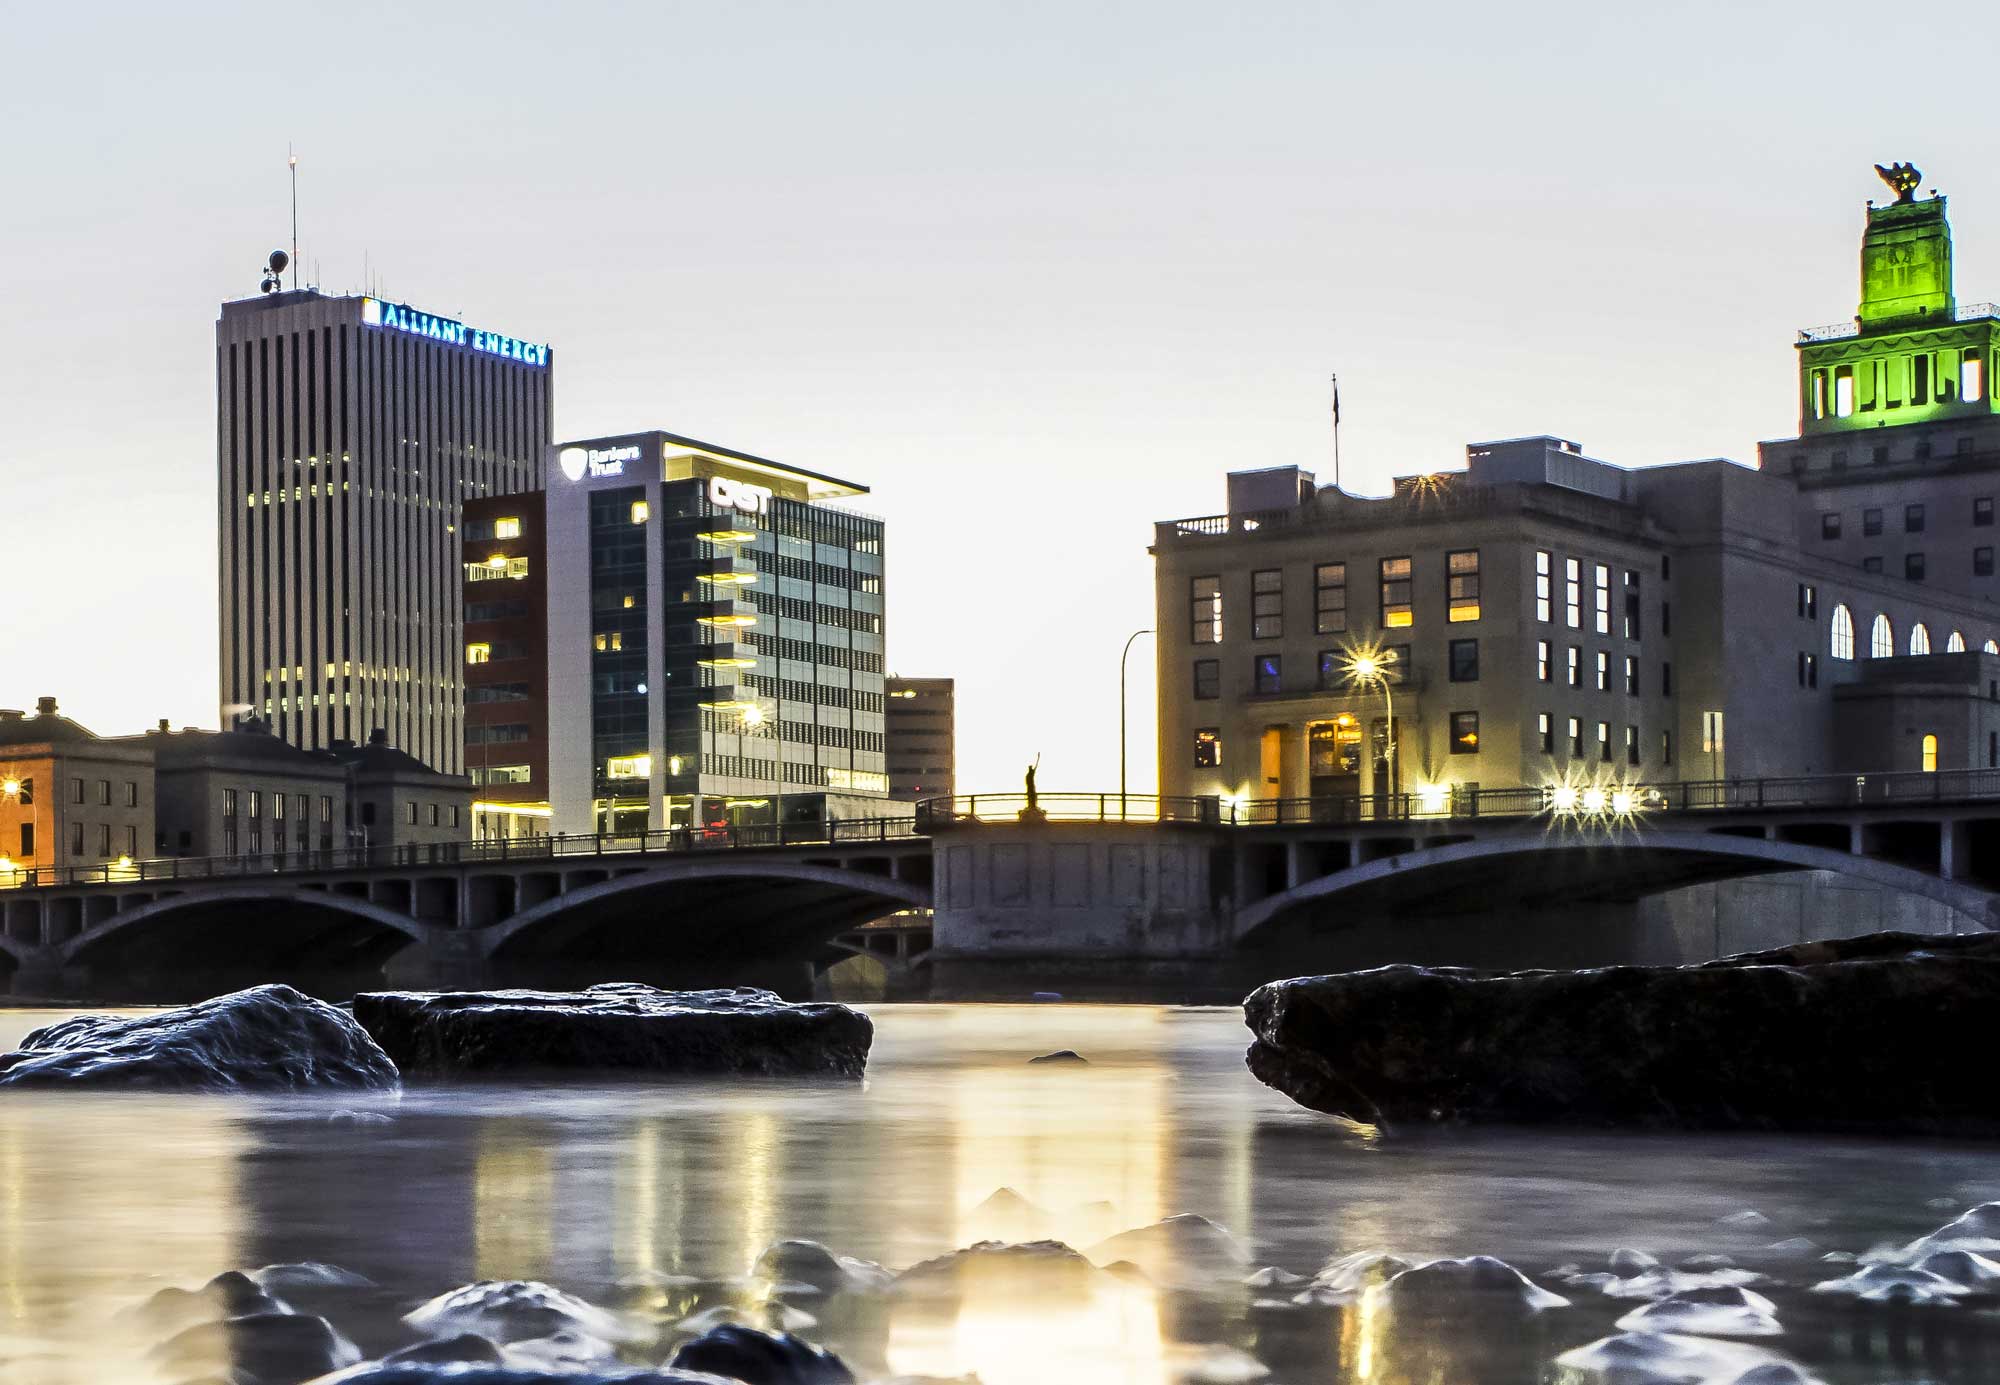 Downtown Cedar Rapids businesses reflected in the Cedar River